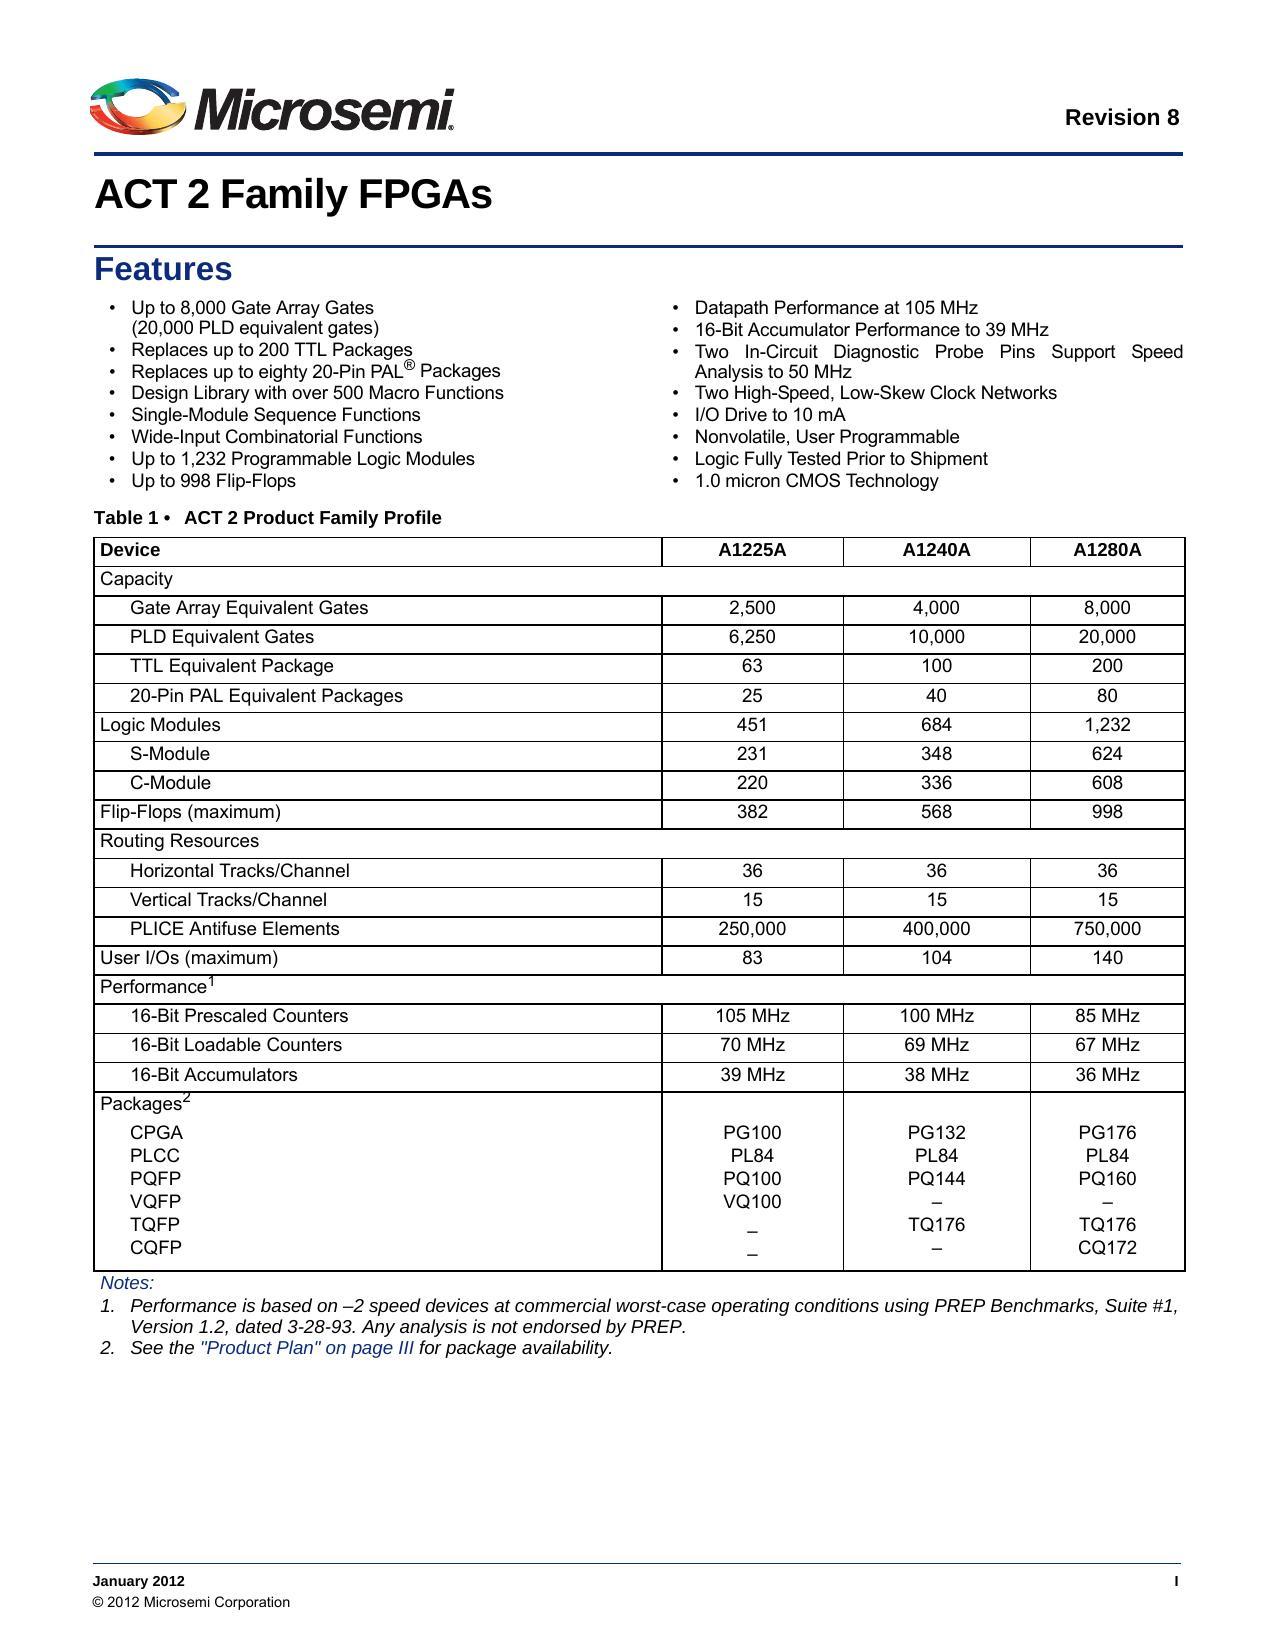 microsemi-act-2-family-fpgas.pdf